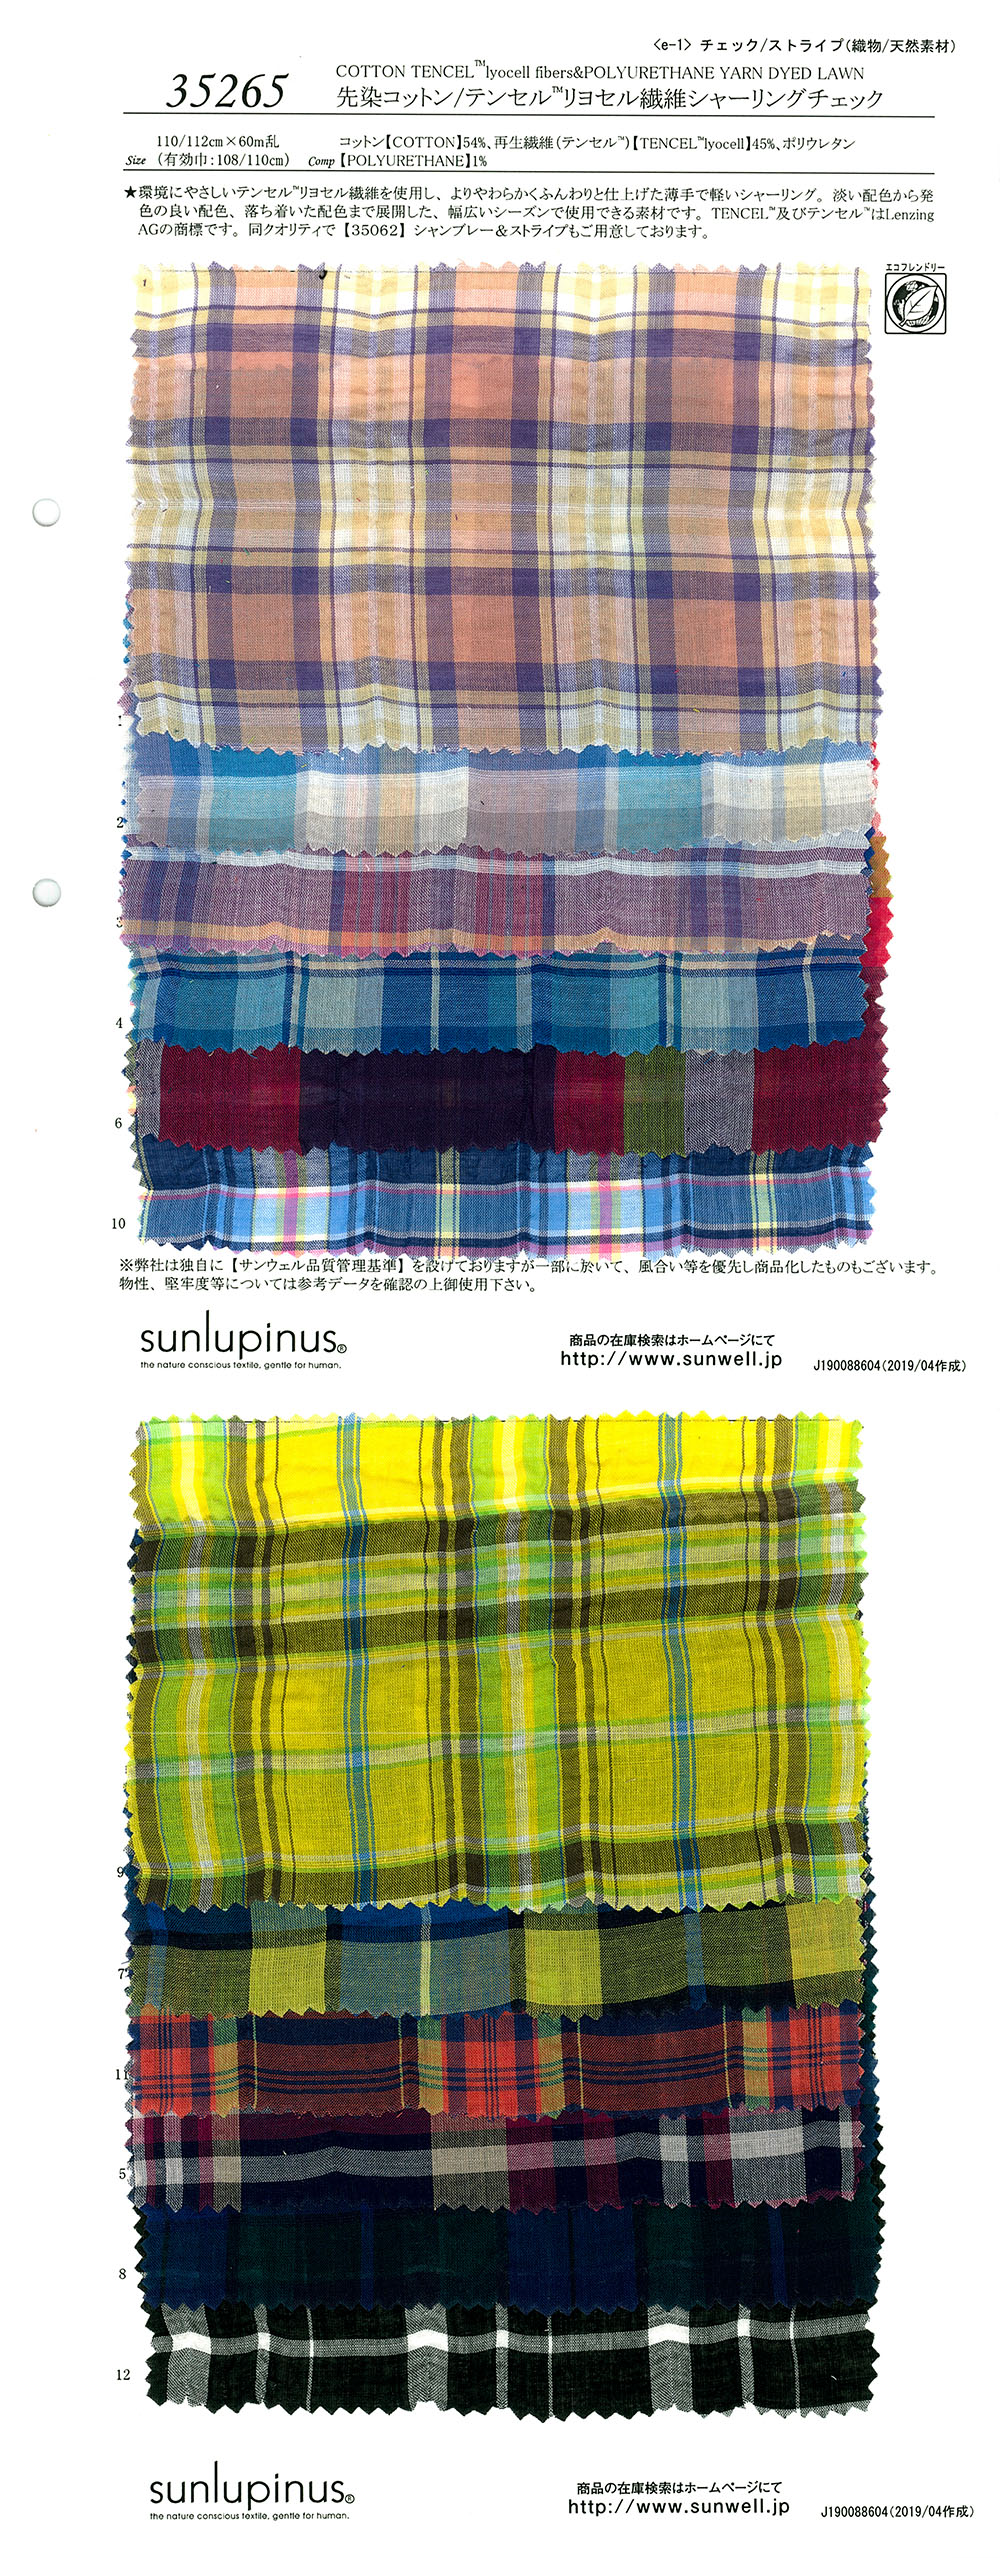 35265 Garngefärbte Baumwolle/Tencel (TM) Lyocell-Faser Kräuselkaros[Textilgewebe] SUNWELL